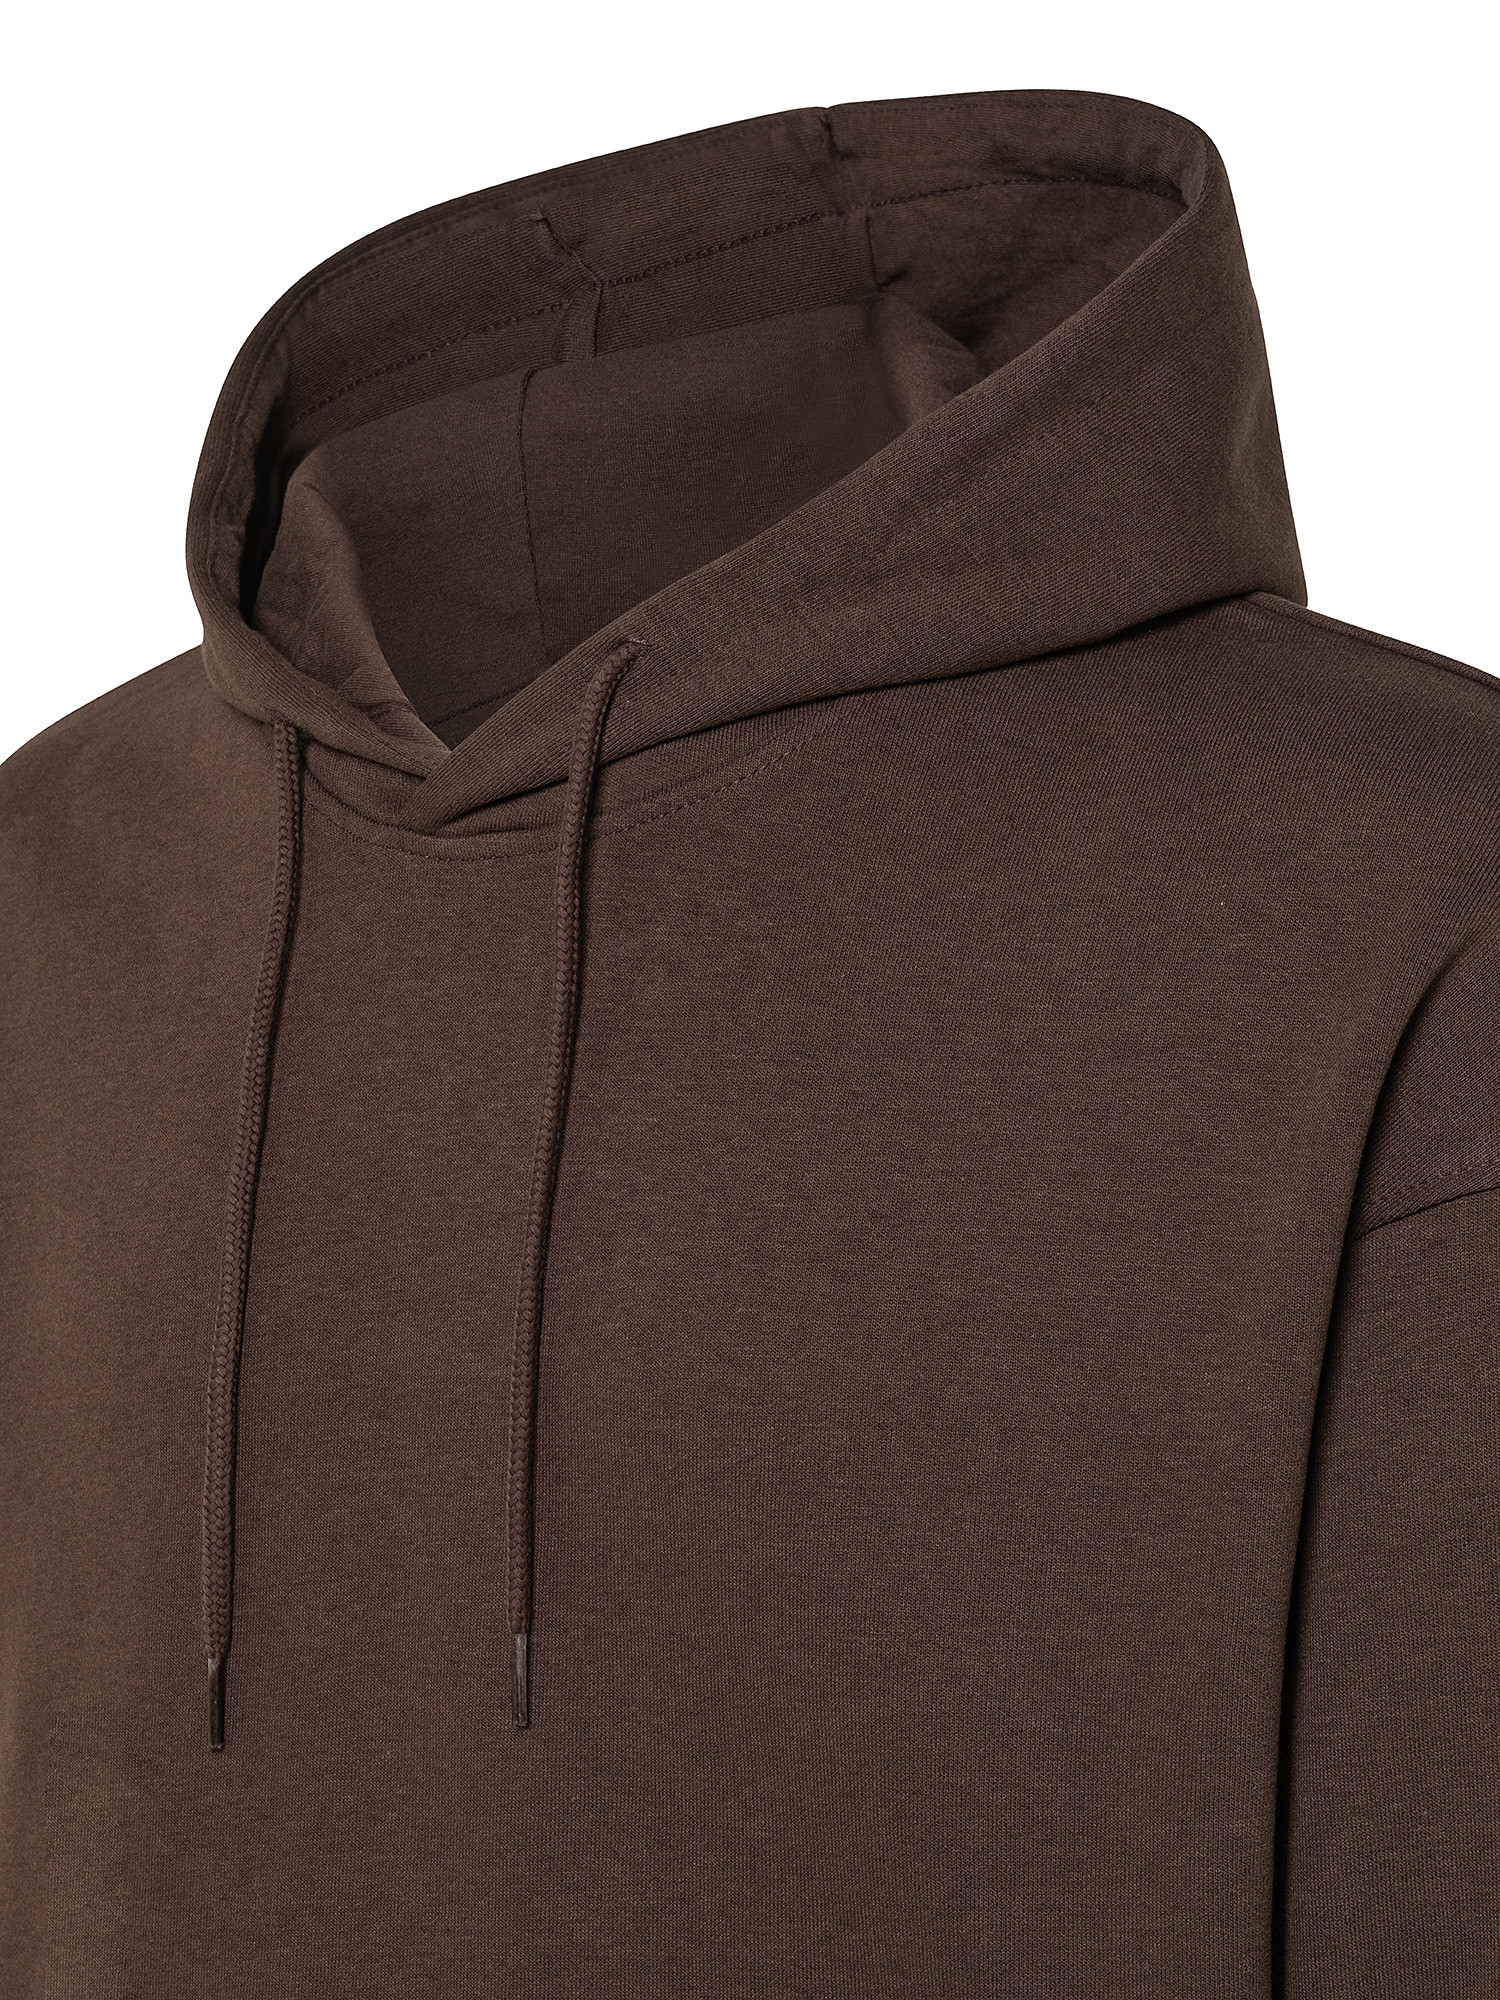 Sweatshirt with hood and long sleeves, Brown, large image number 2